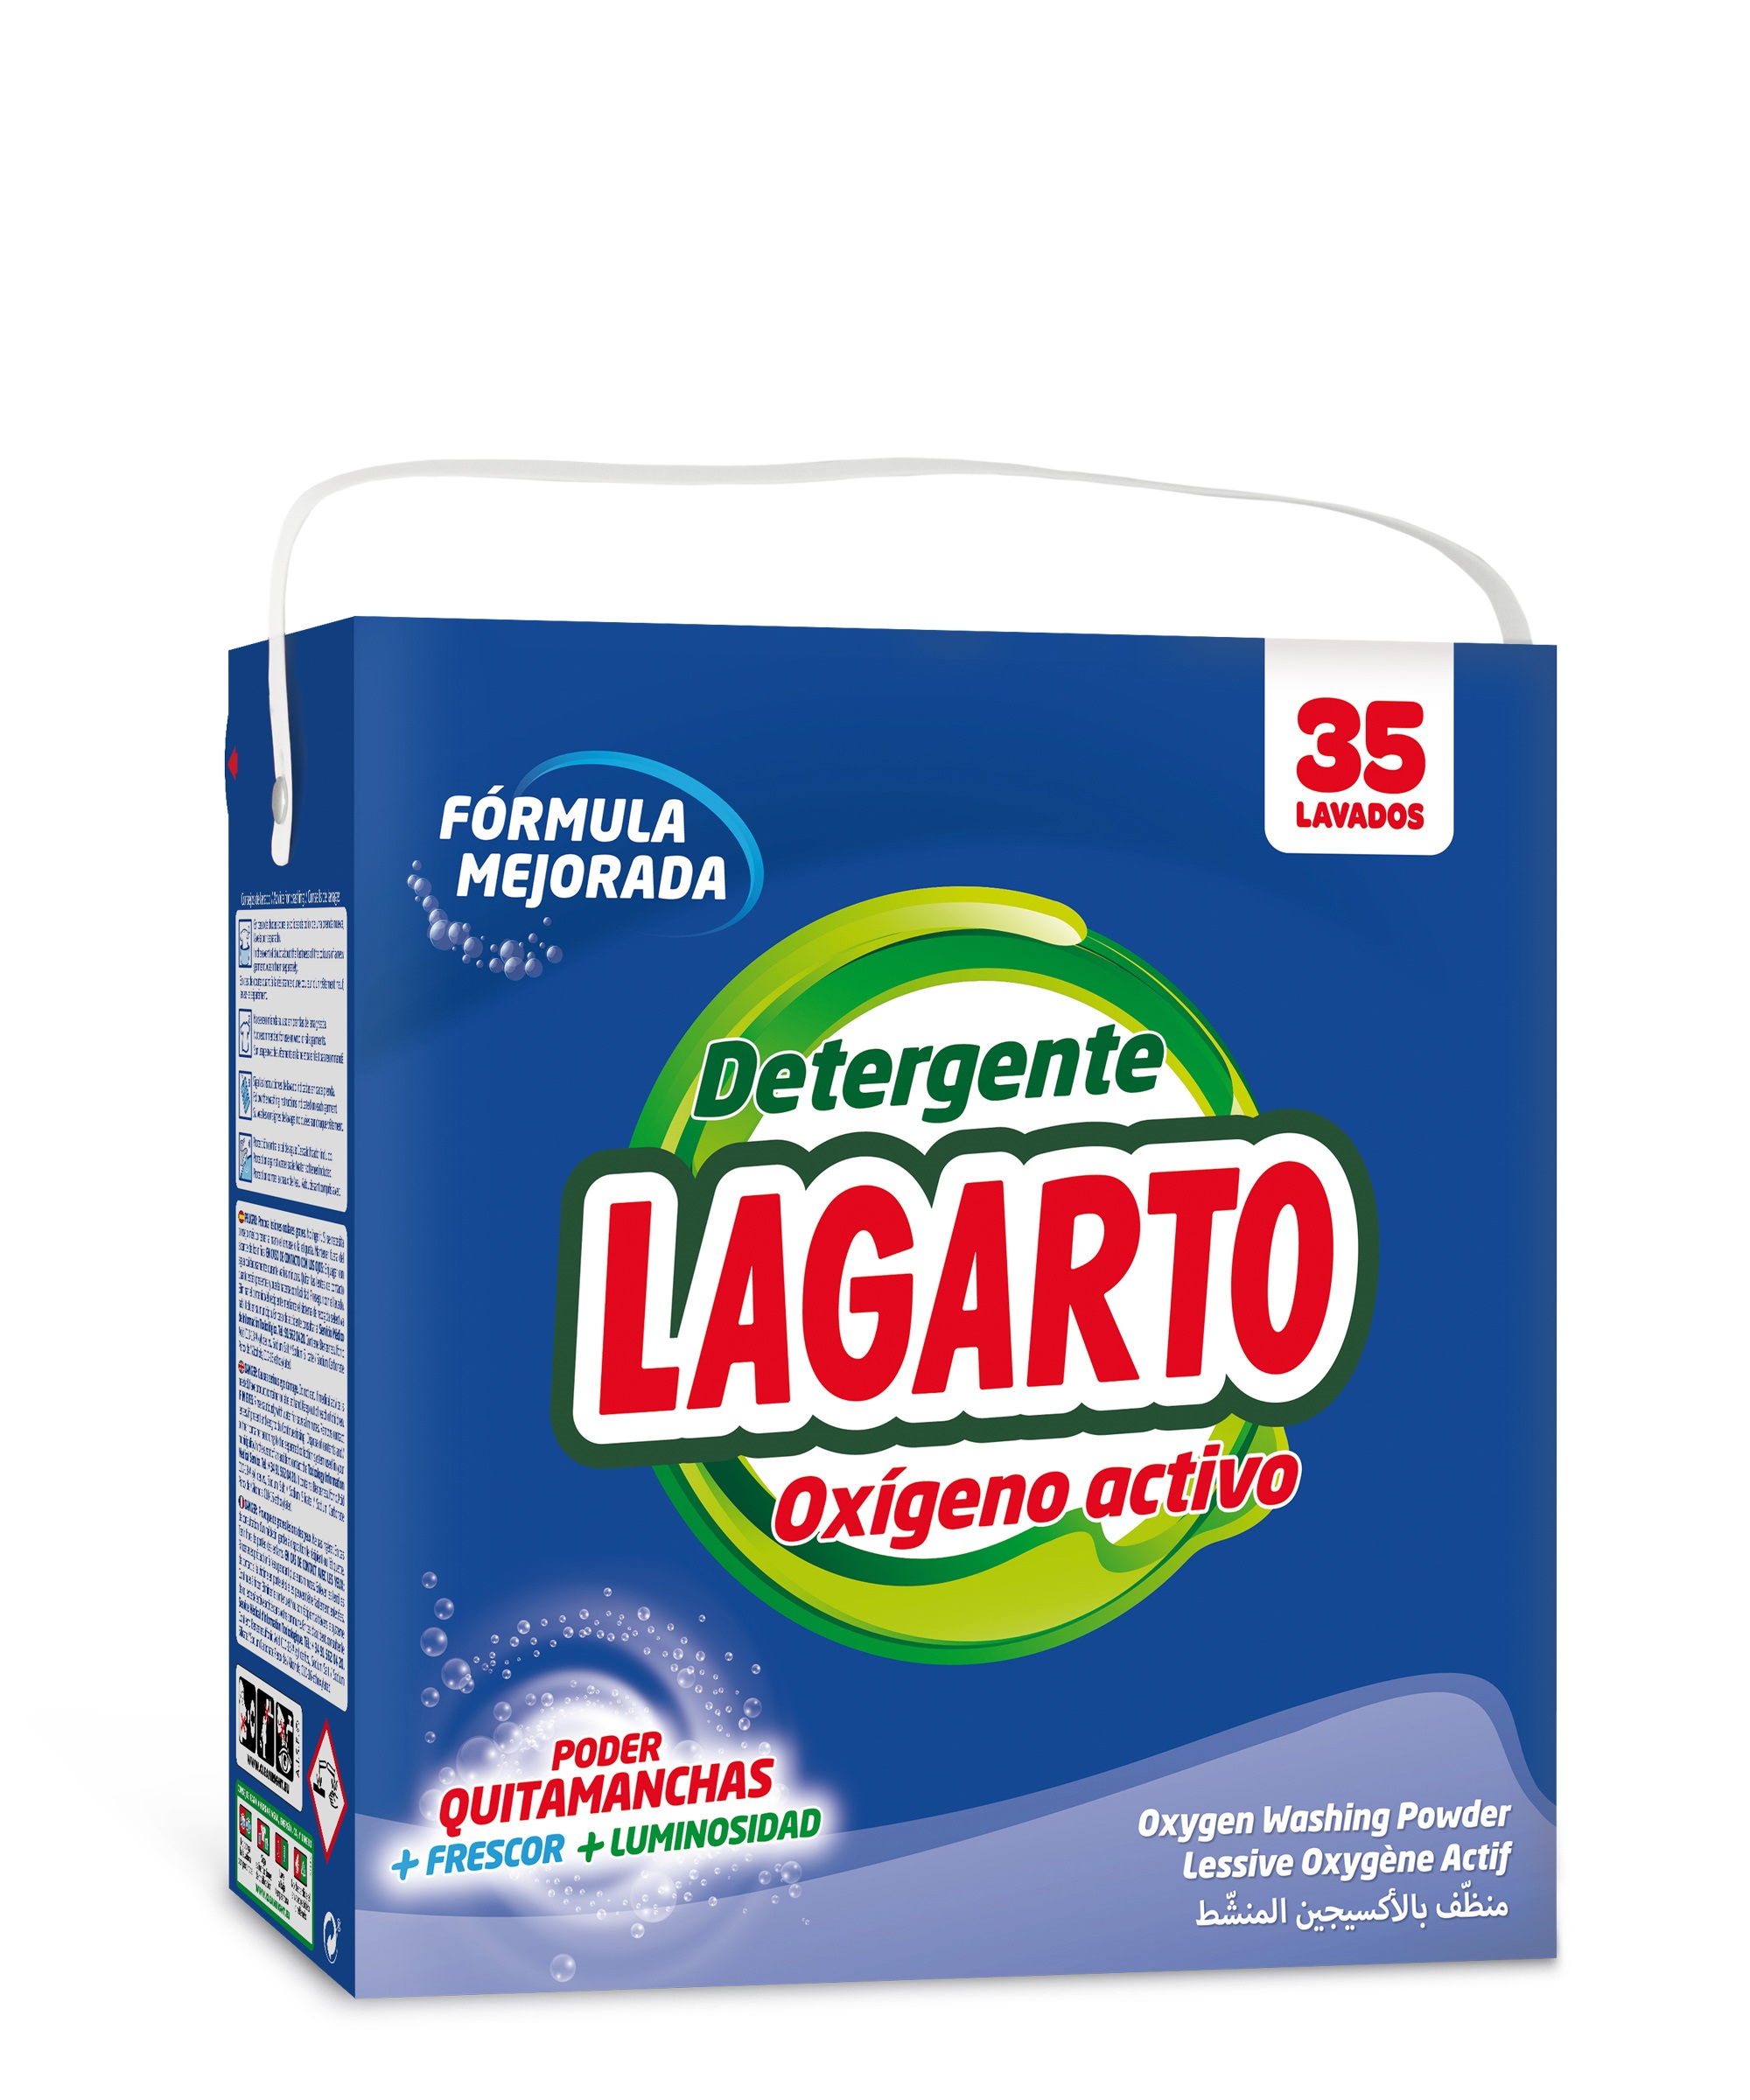 Lagarto oxiaction detergent